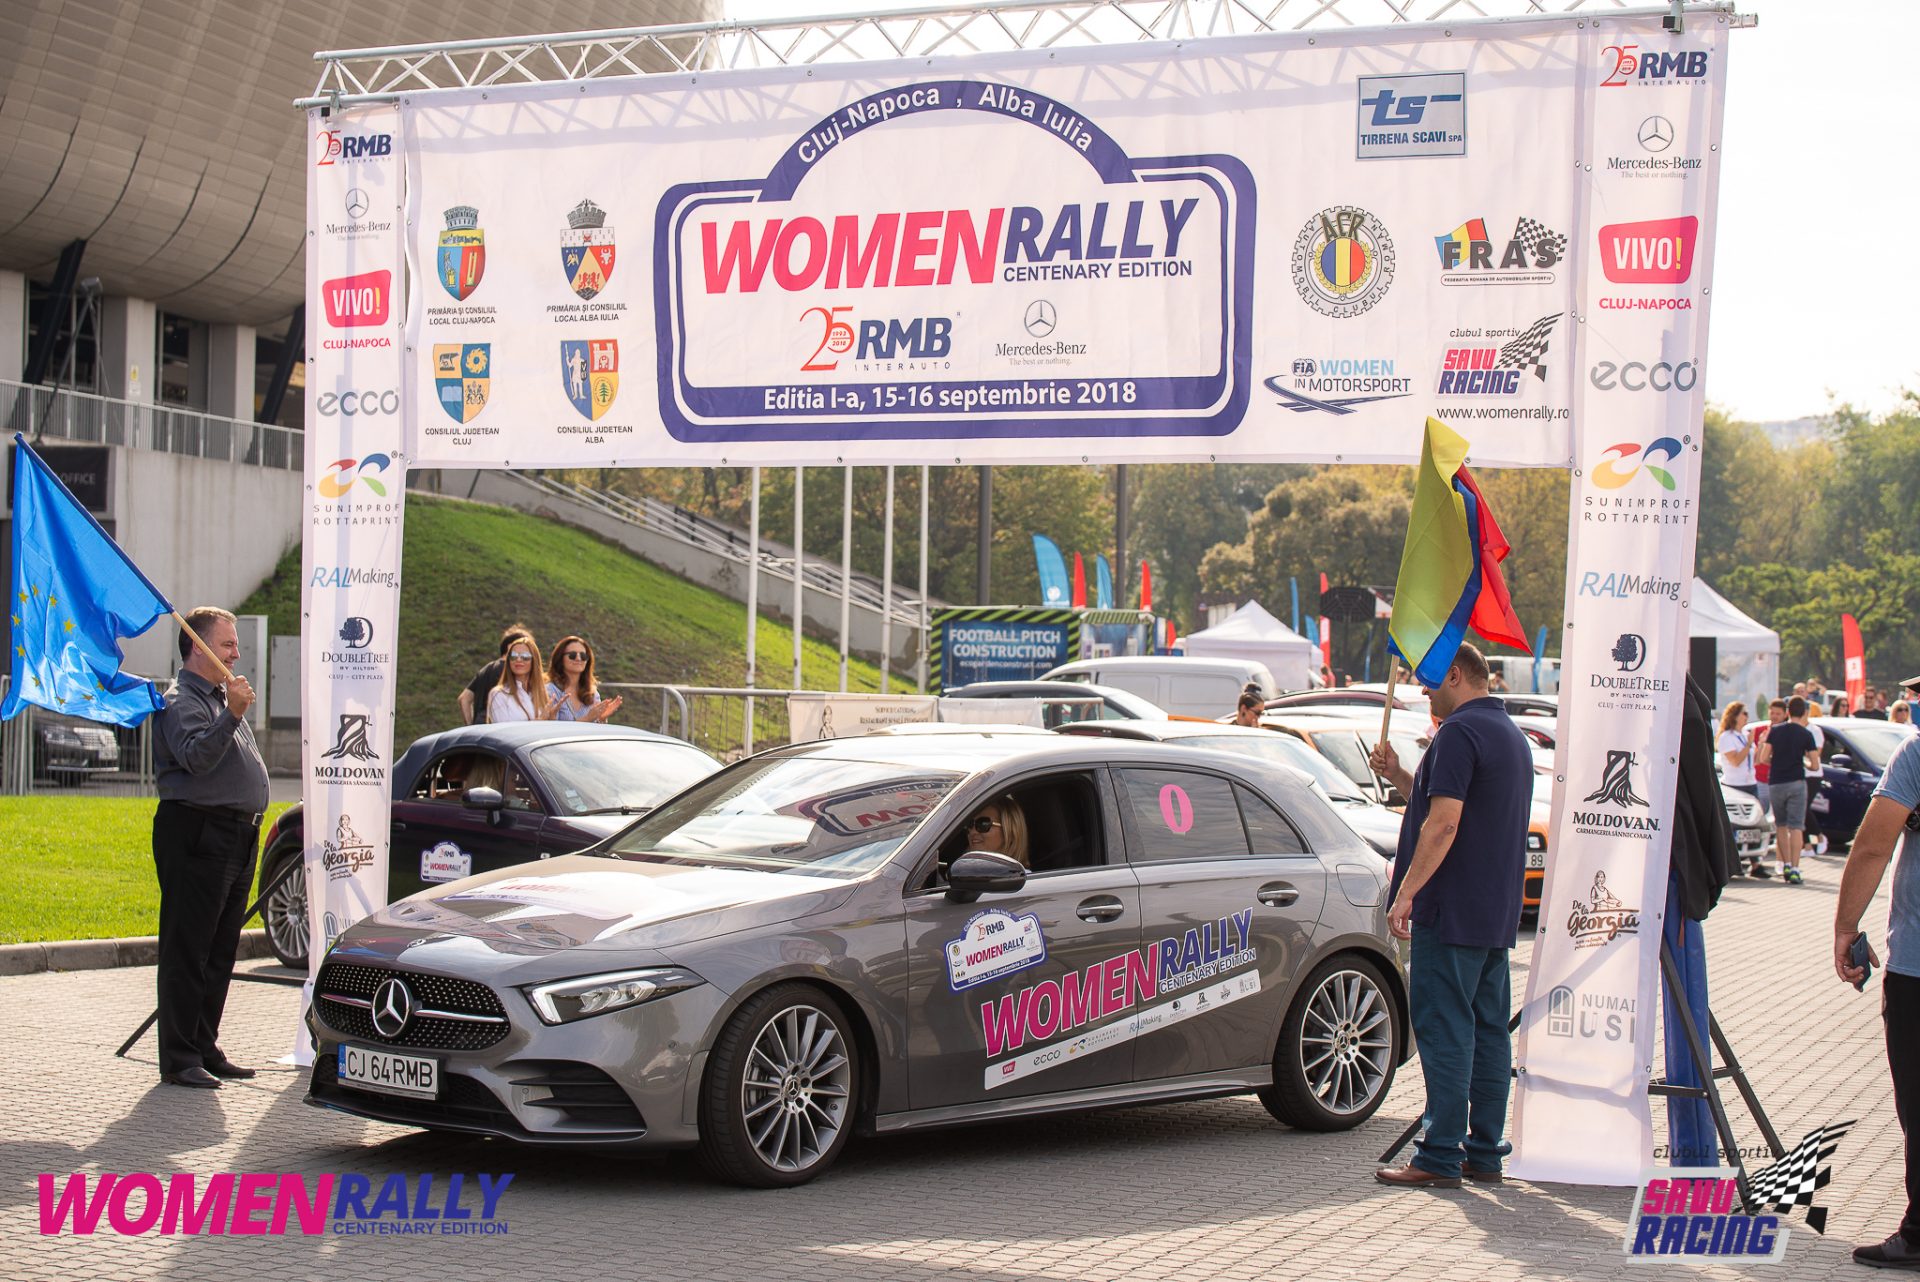 Women Rally 2019 ? Un campionat dedicat femeilor